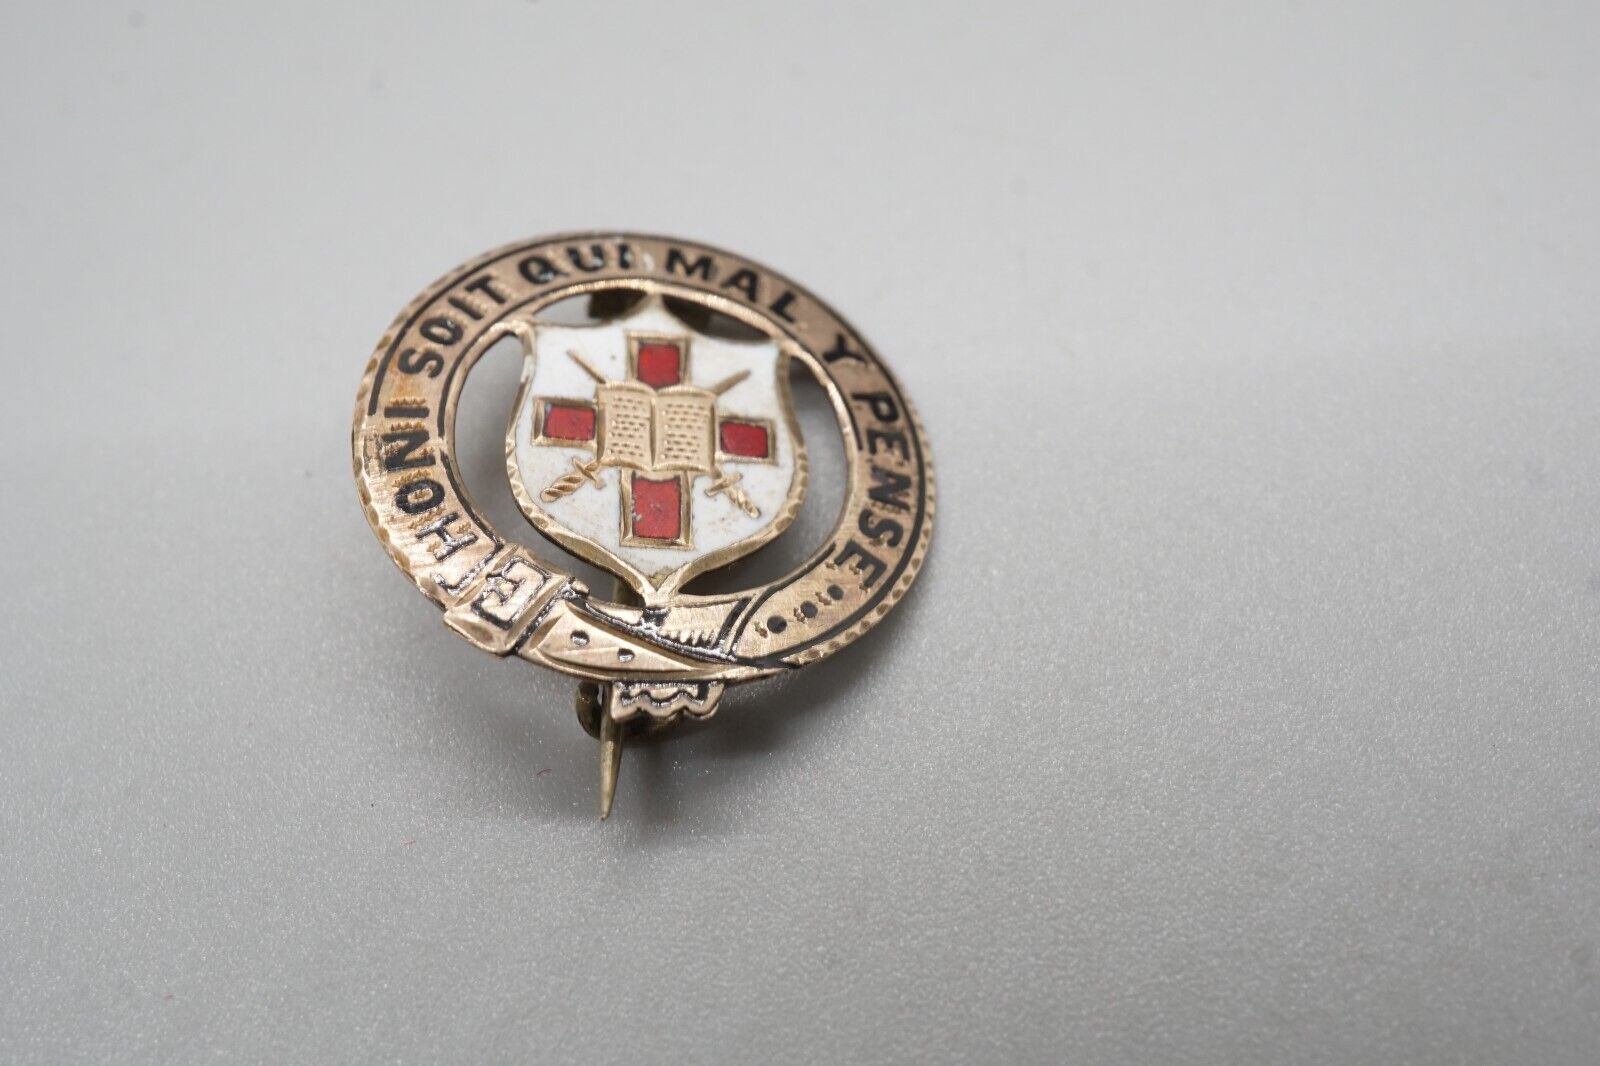 Antique 1890s - 1910s 10K GOLD Order Of The Garter Fraternal Organization Pin